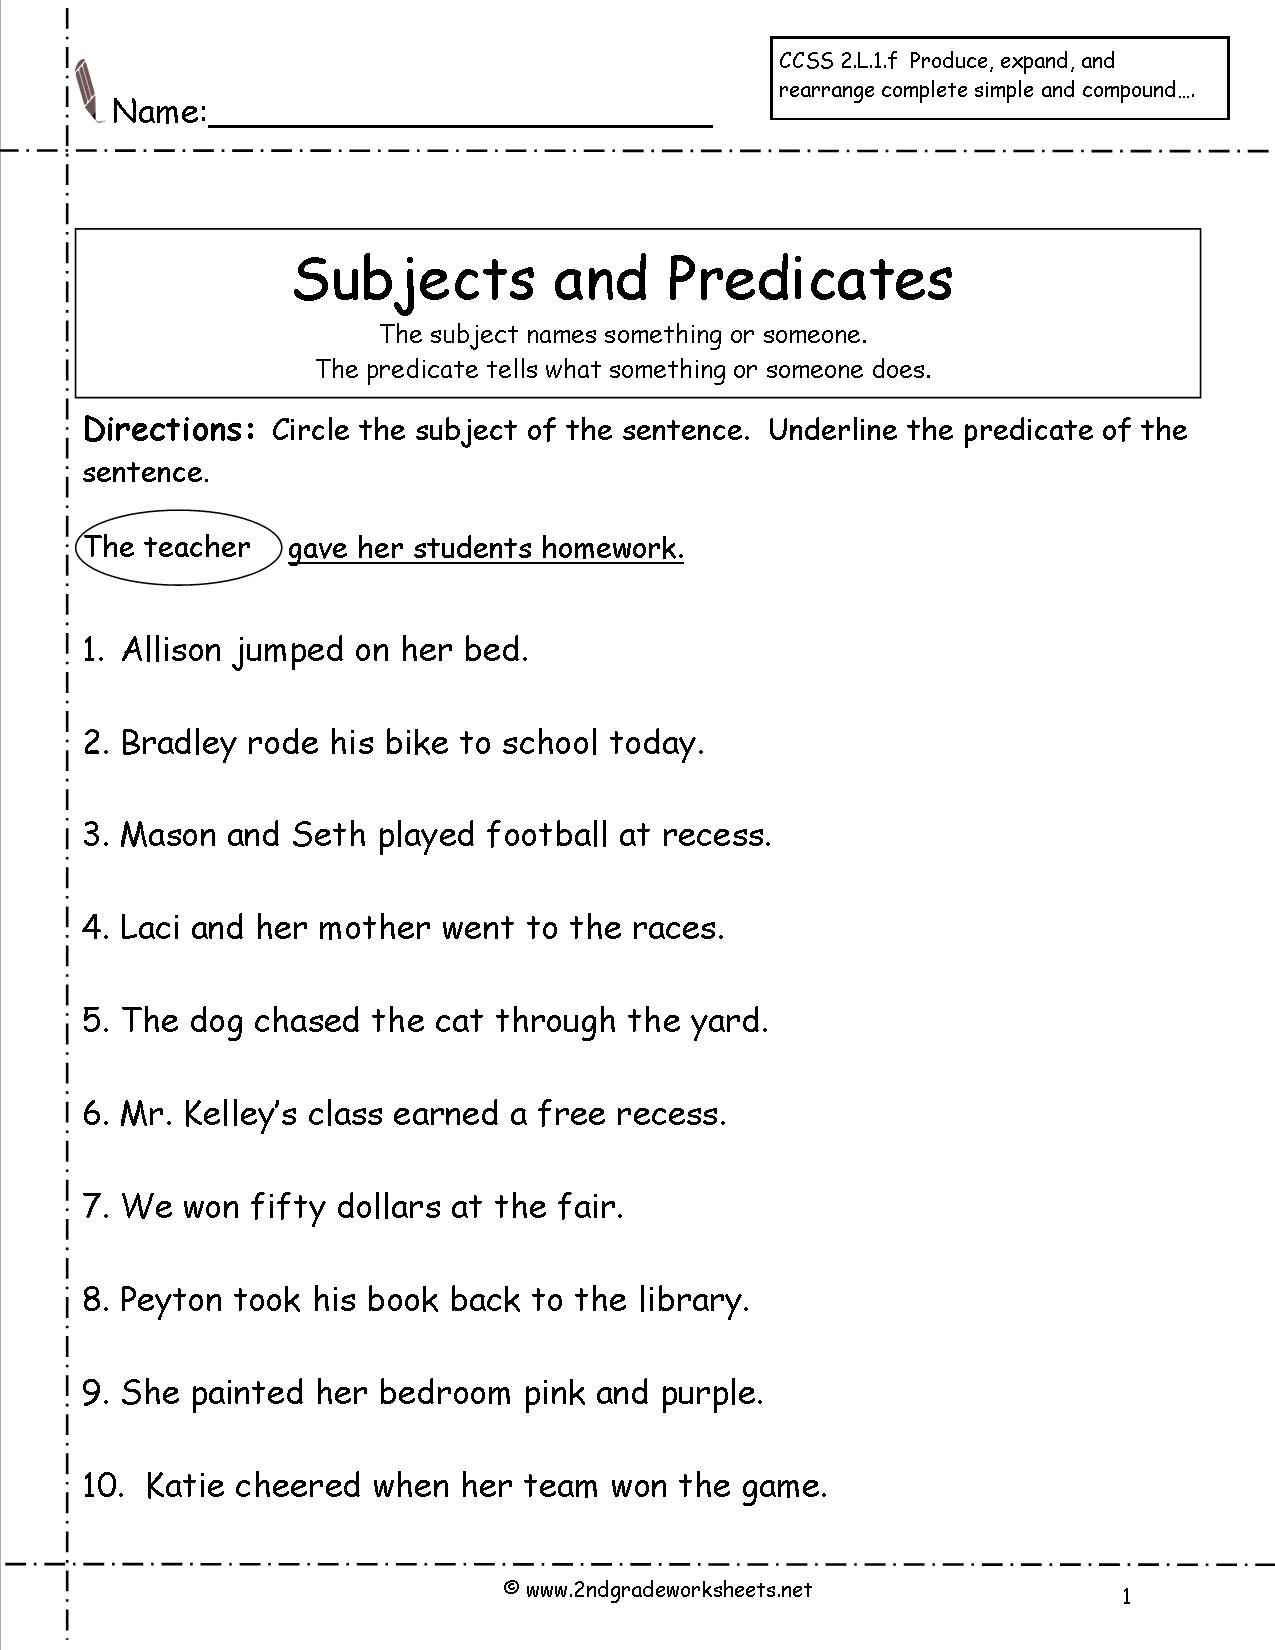 Subject Predicate Worksheets 2Nd Grade - Google Search | Kid Stuff - Free Printable Subject Predicate Worksheets 2Nd Grade